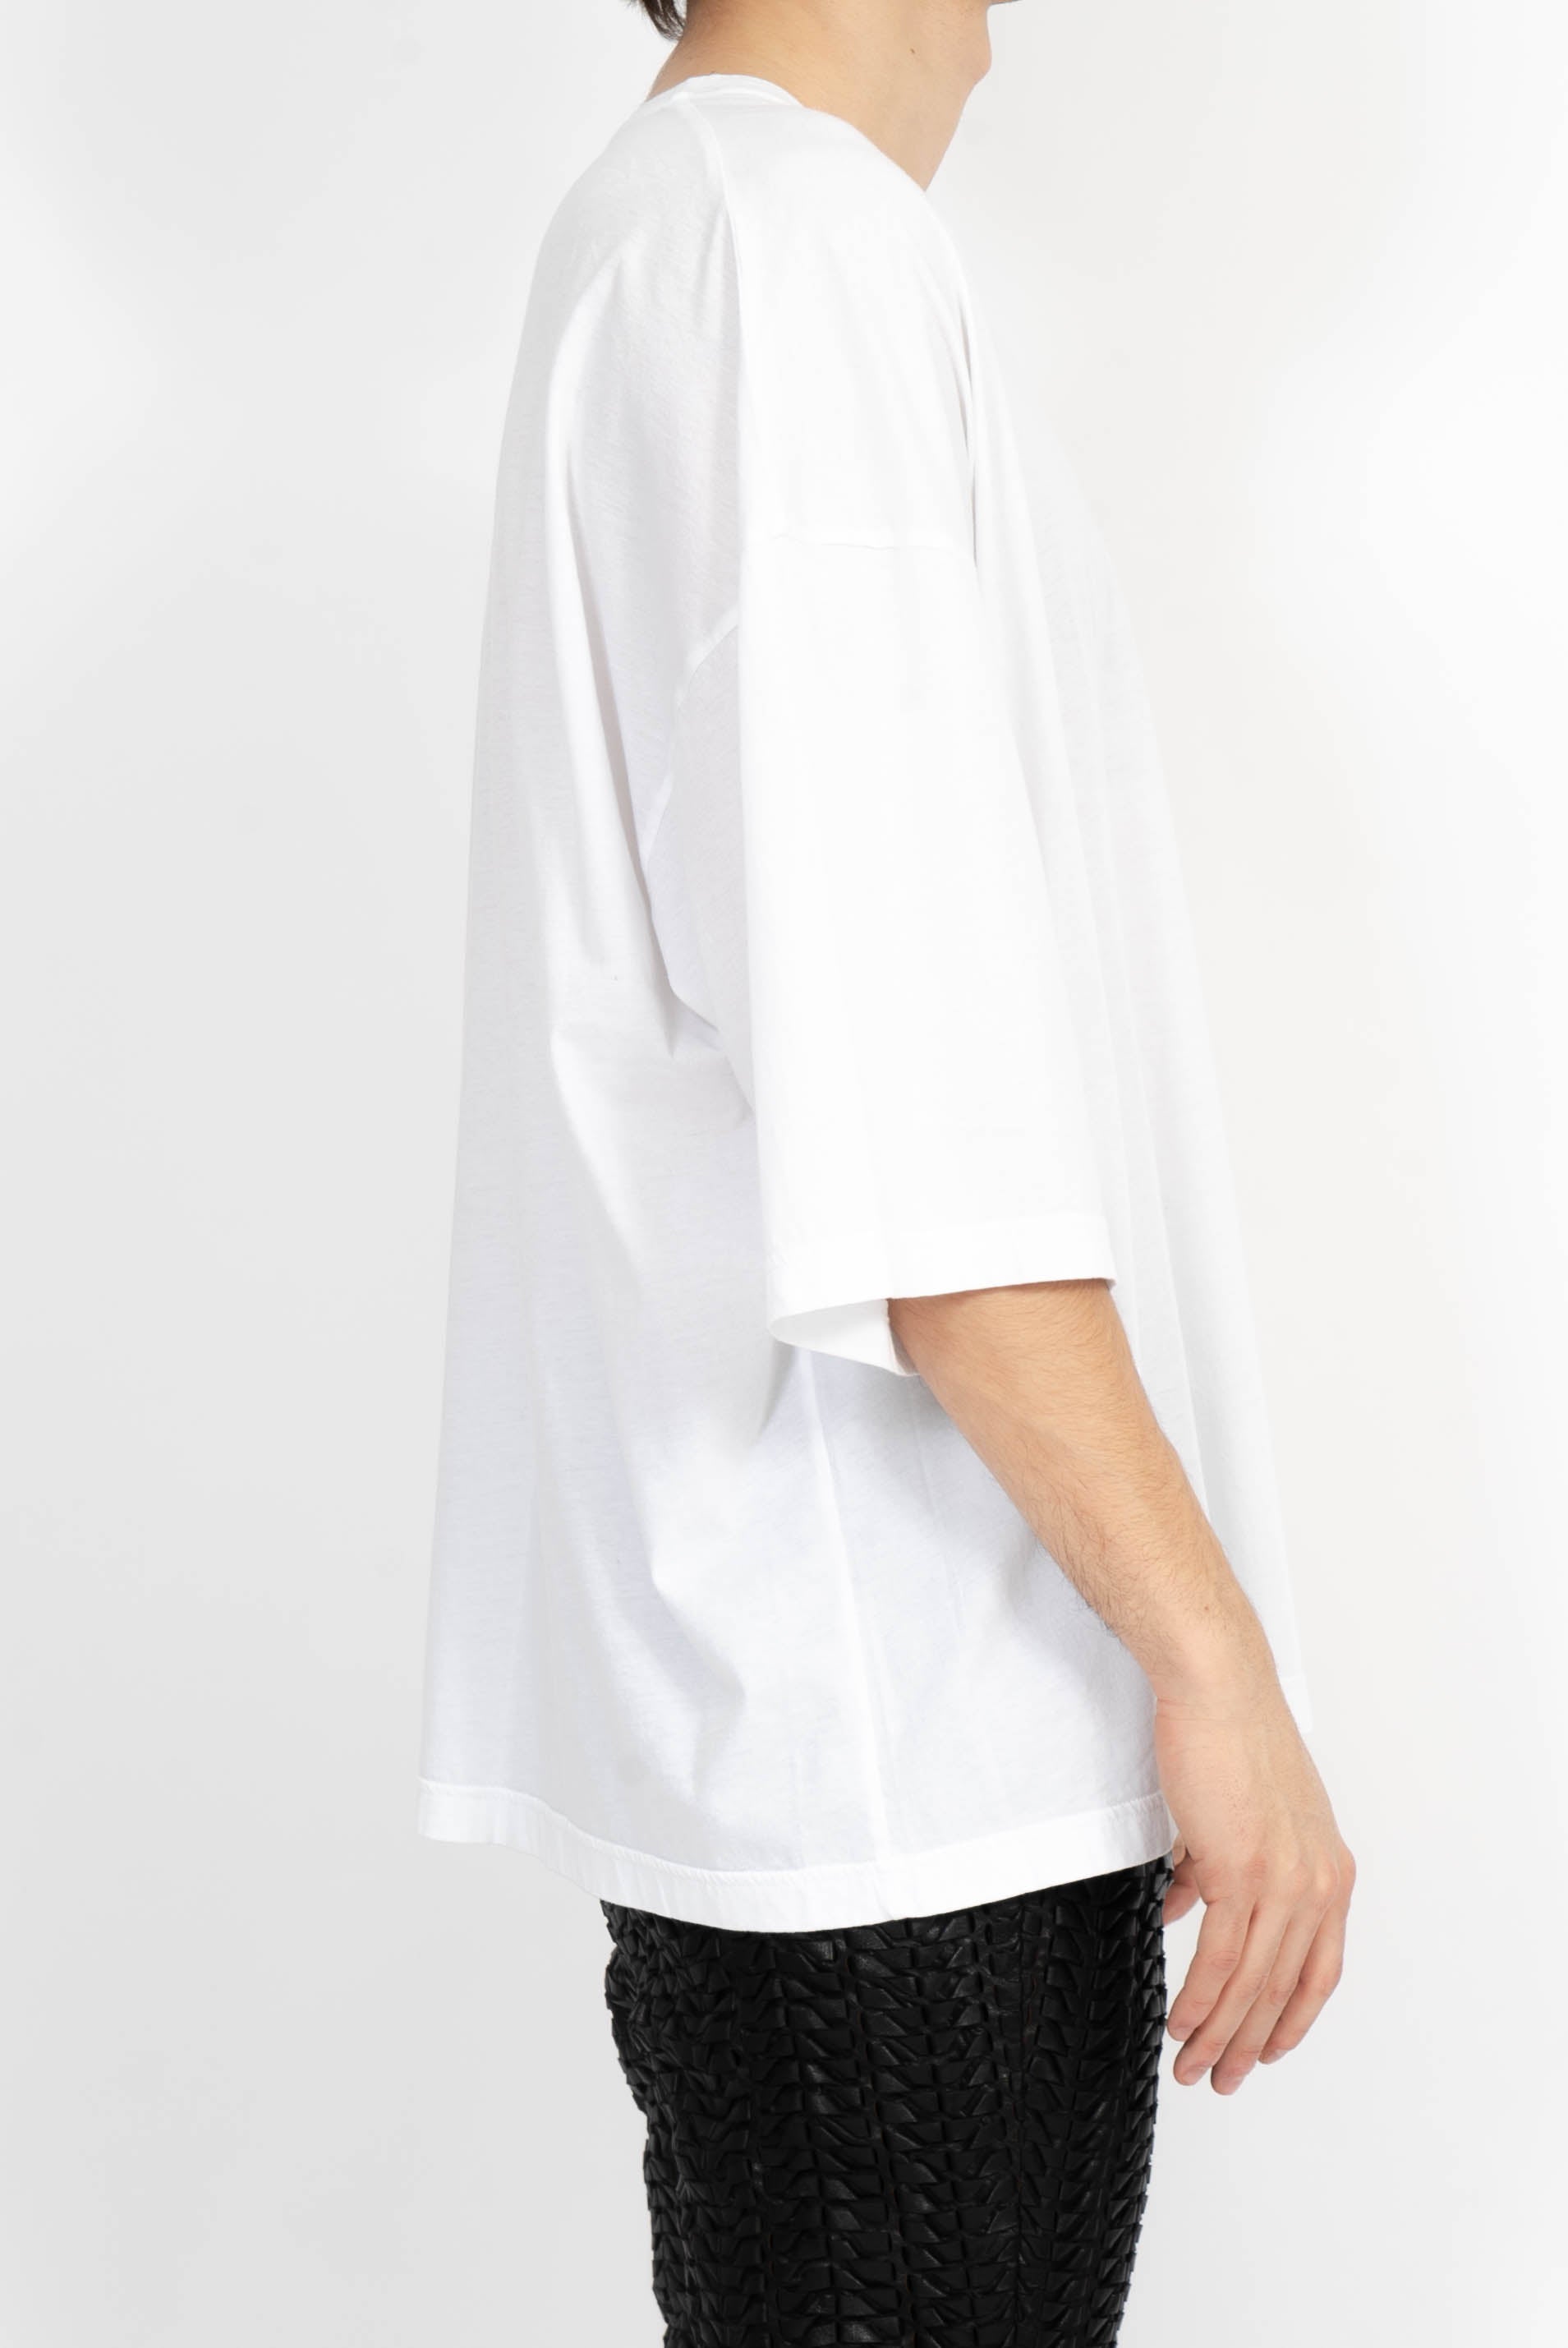 SS20 White Oversized T-Shirt